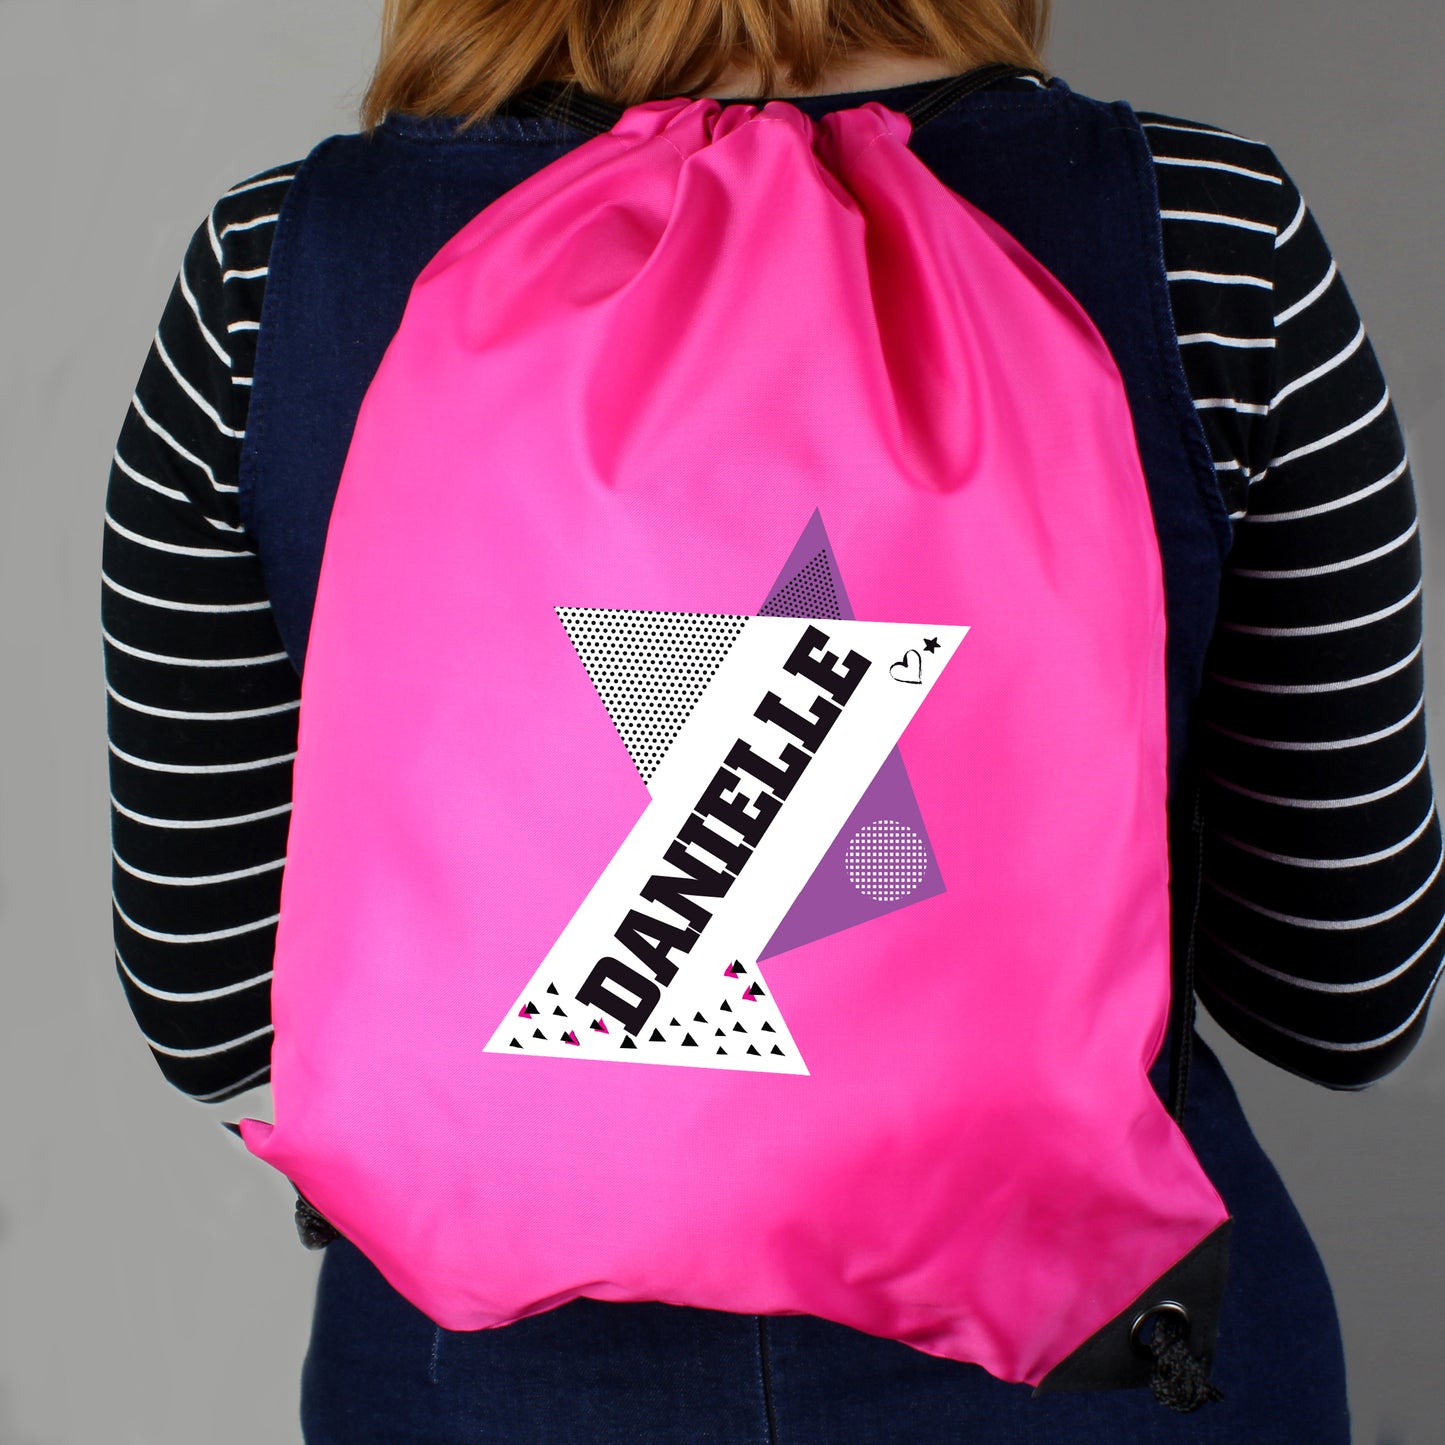 Personalised Dance Pink Kit Bag - Personalise It!